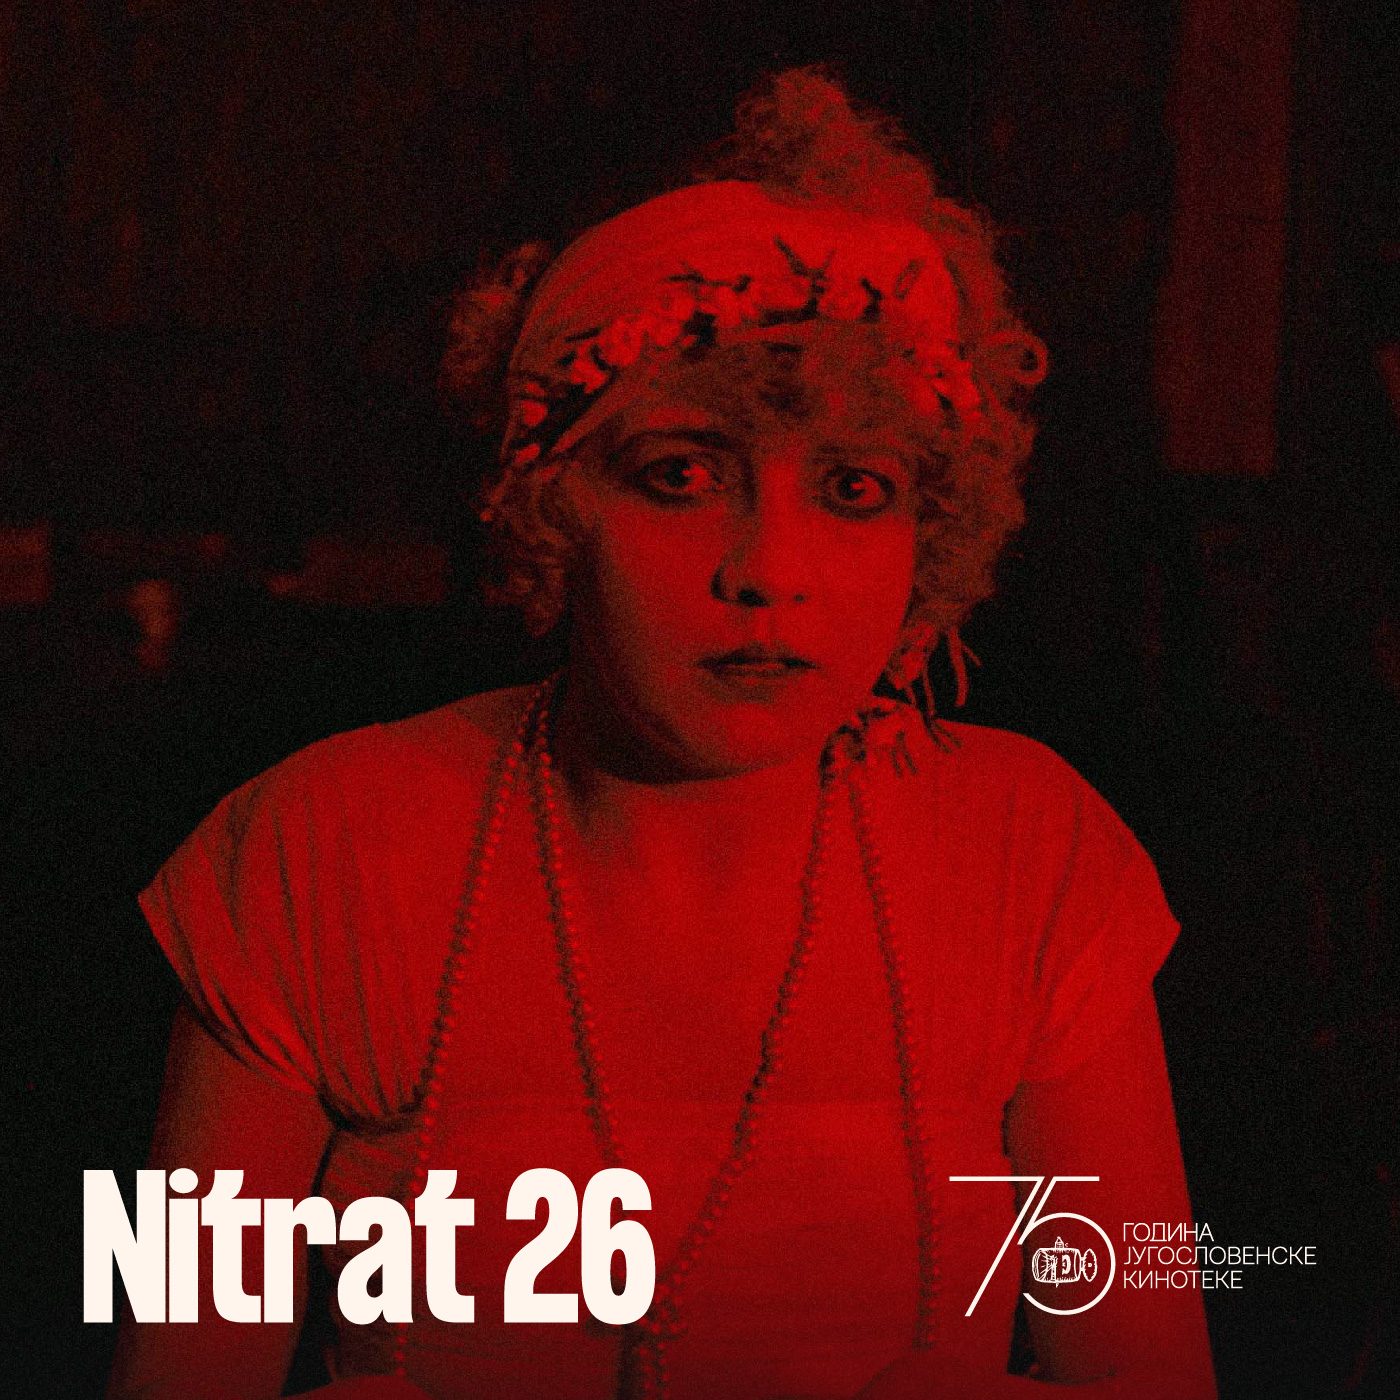 NITRAT 26, najava programa, web ig post-09